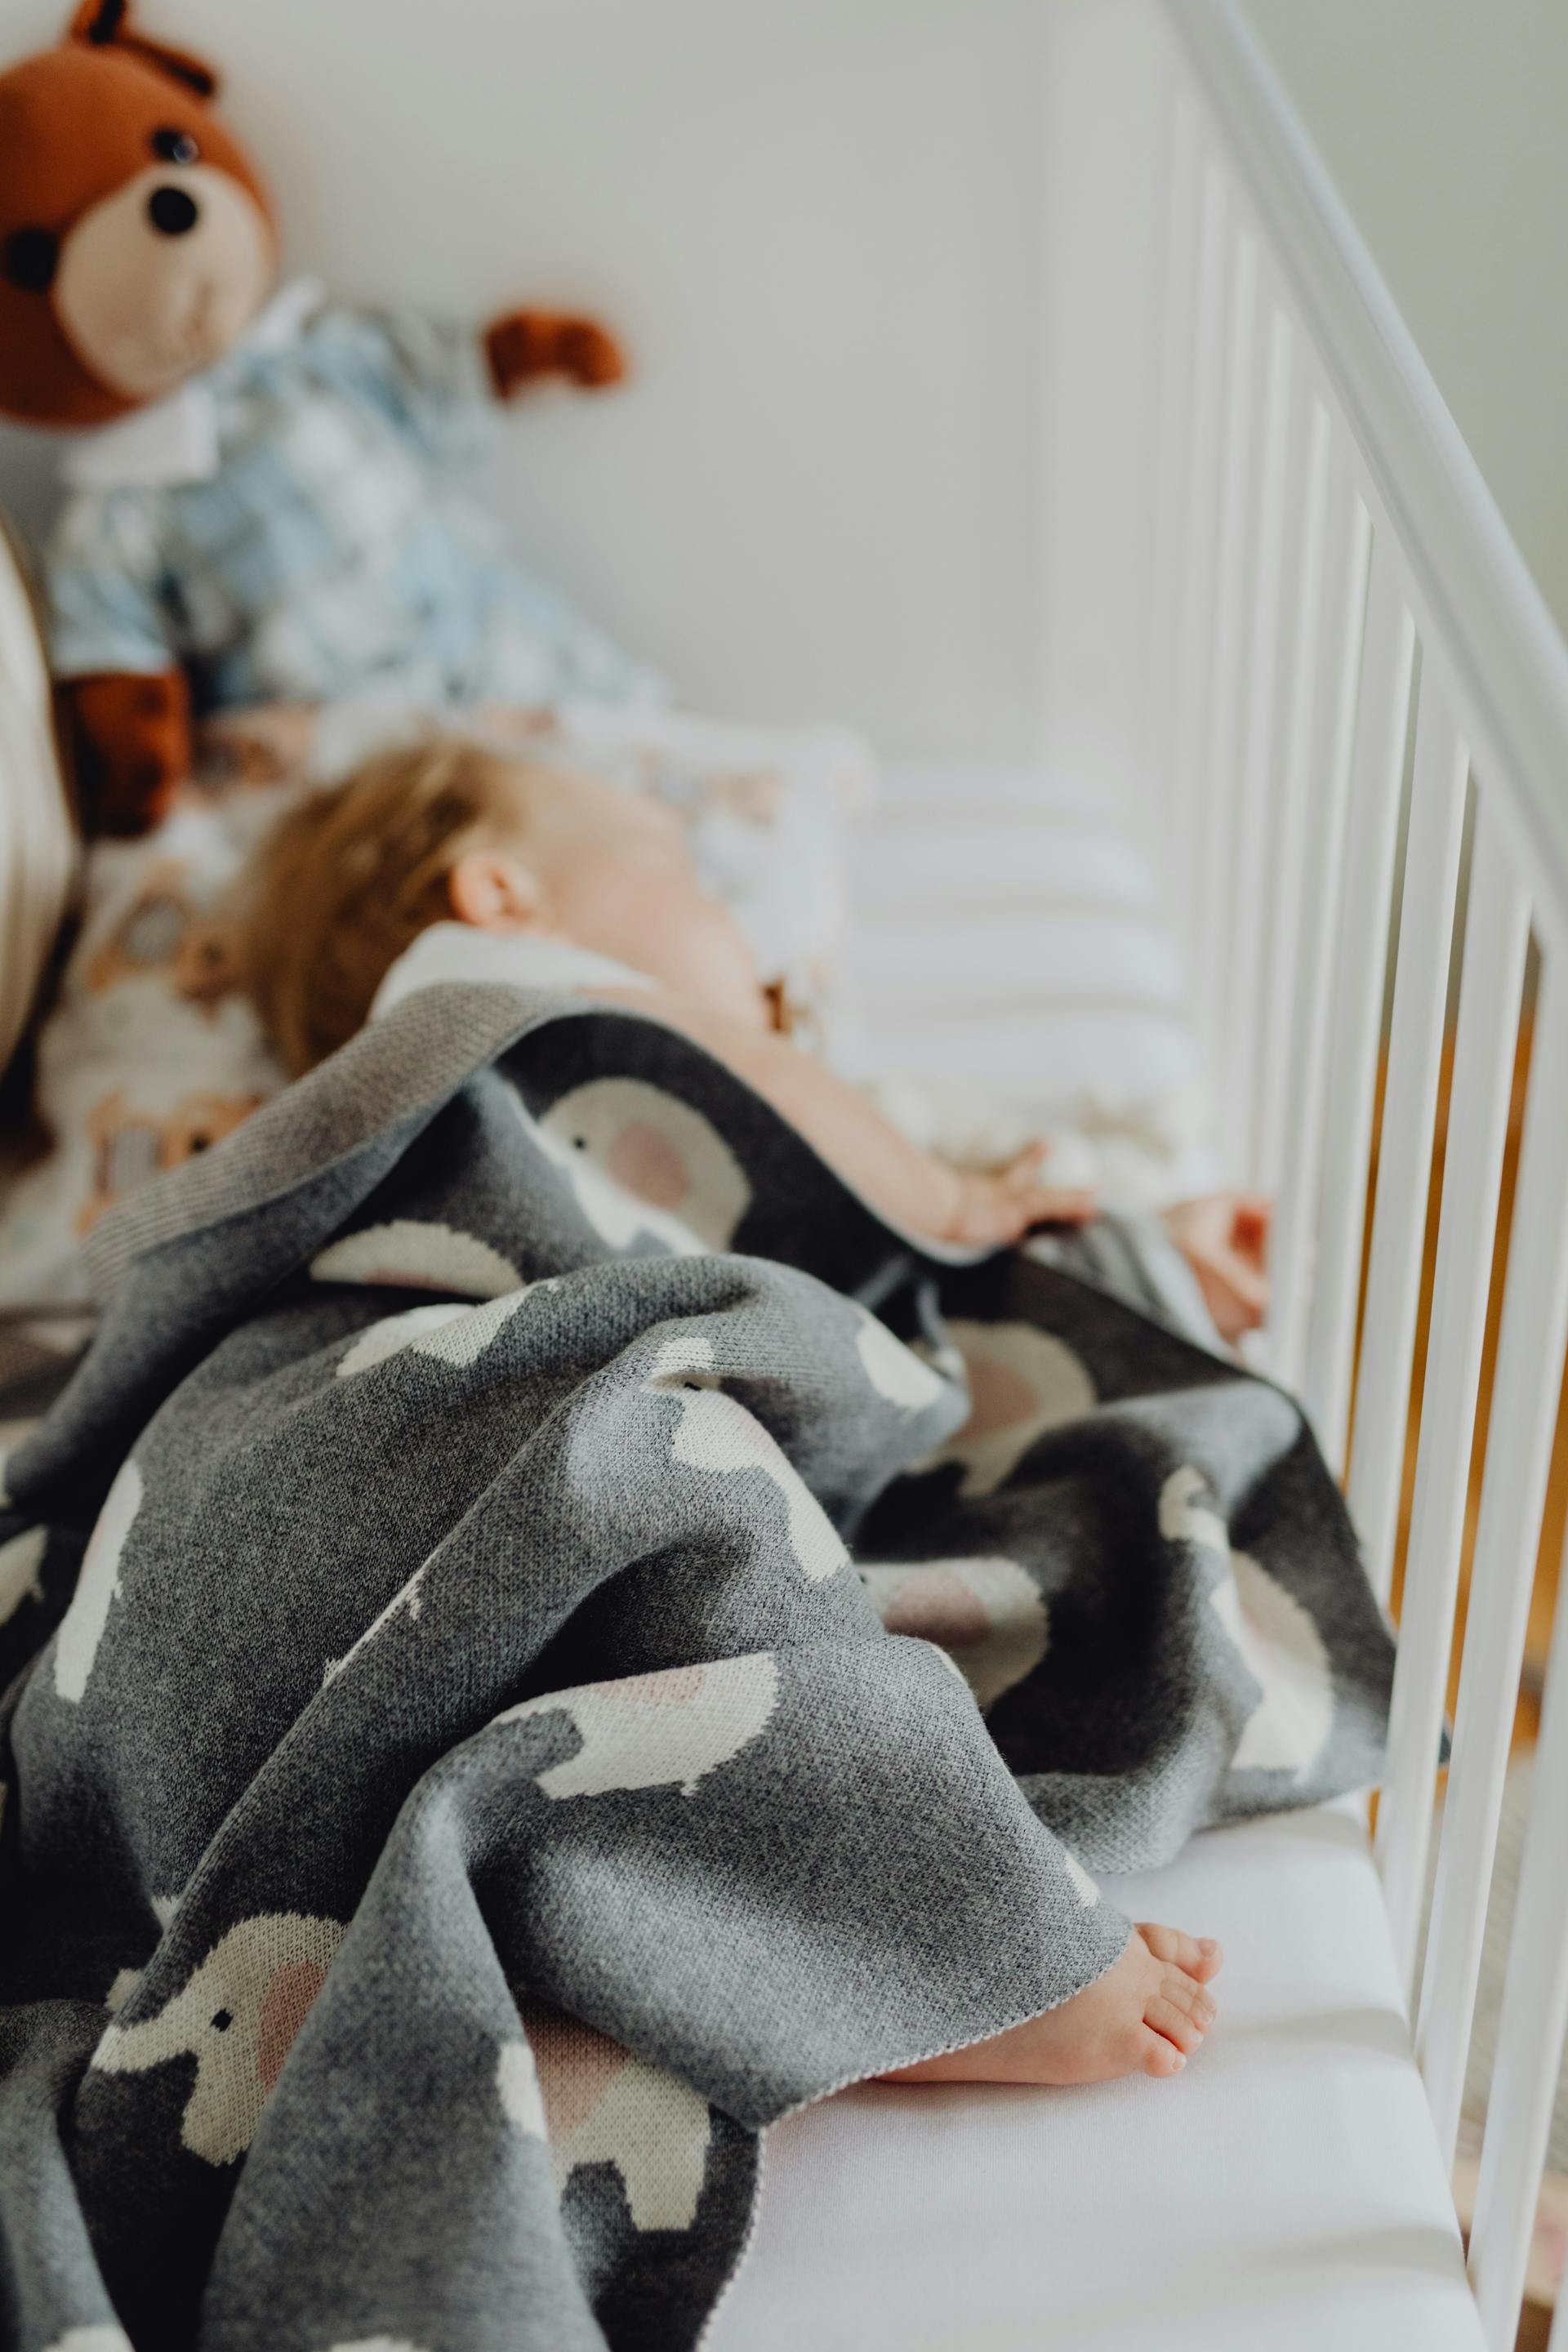 A baby sleeping in her cot | Source: Pexels